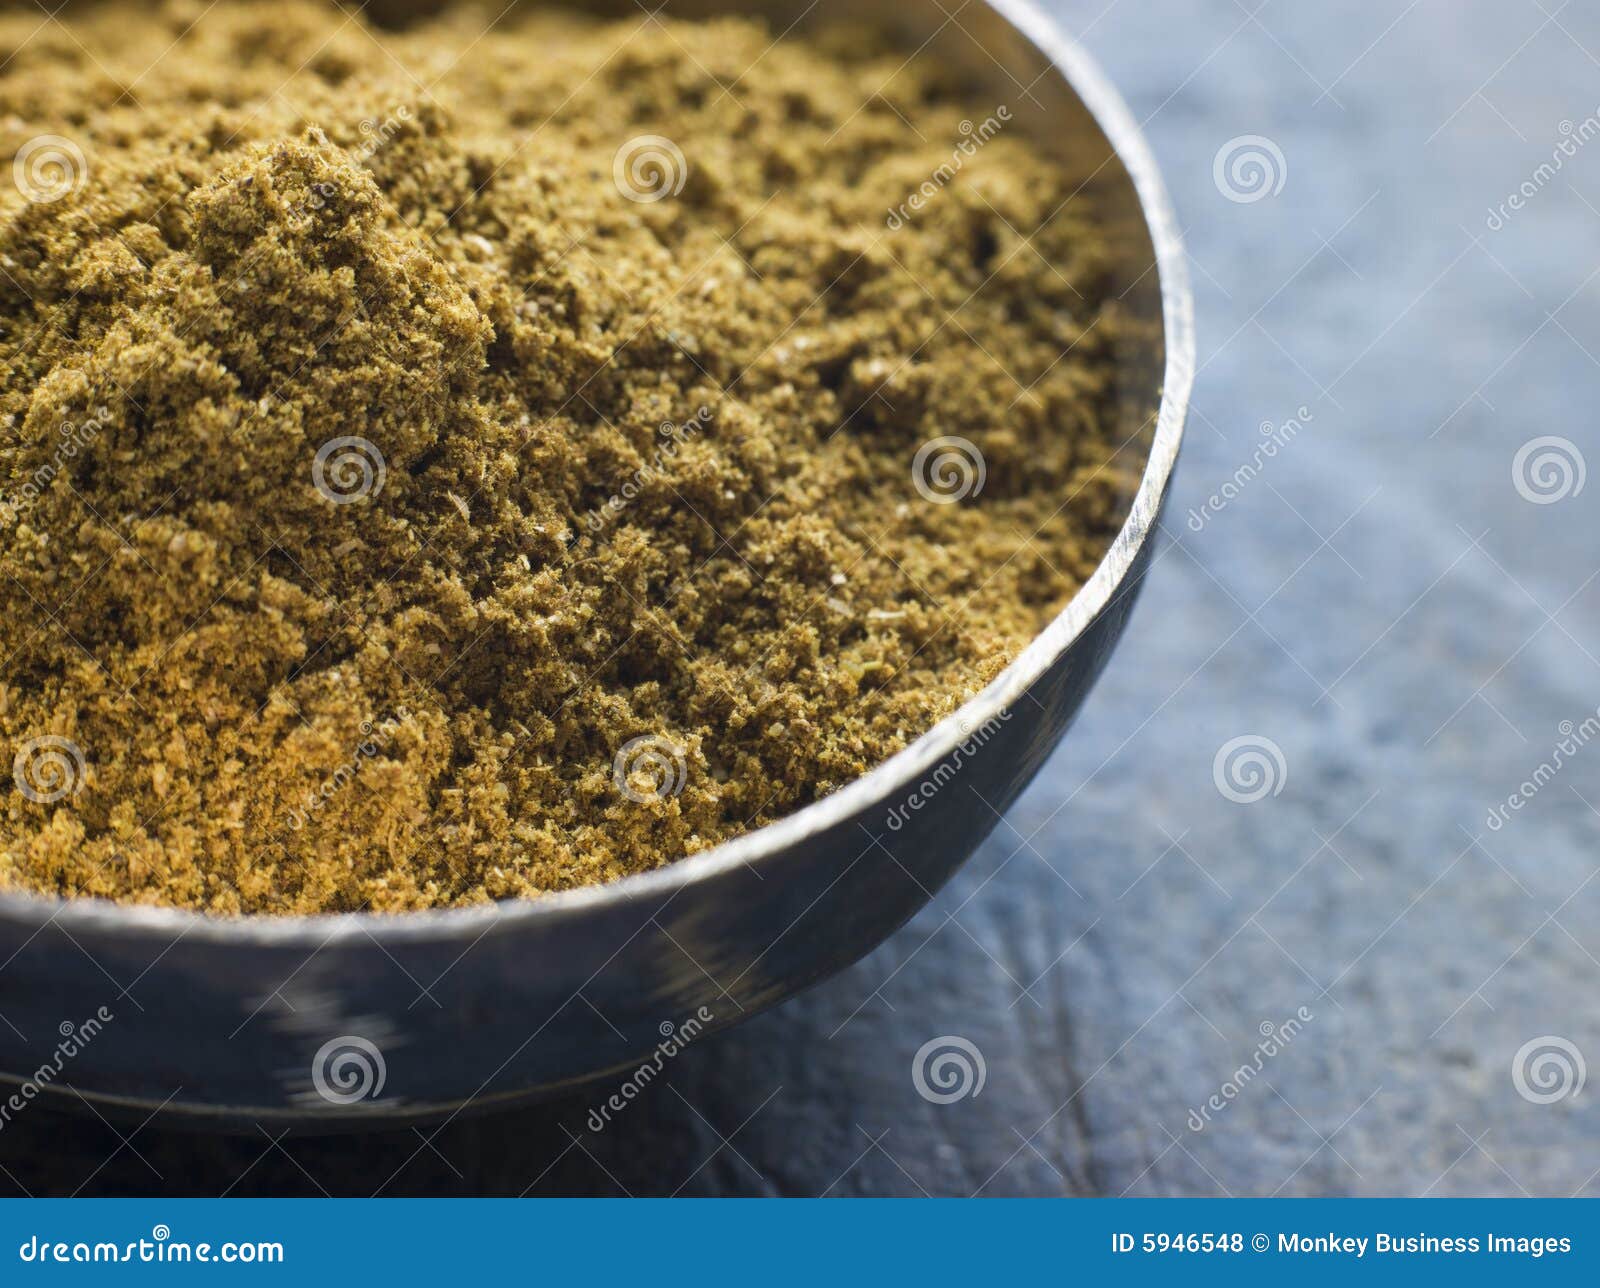 dish of madras curry powder